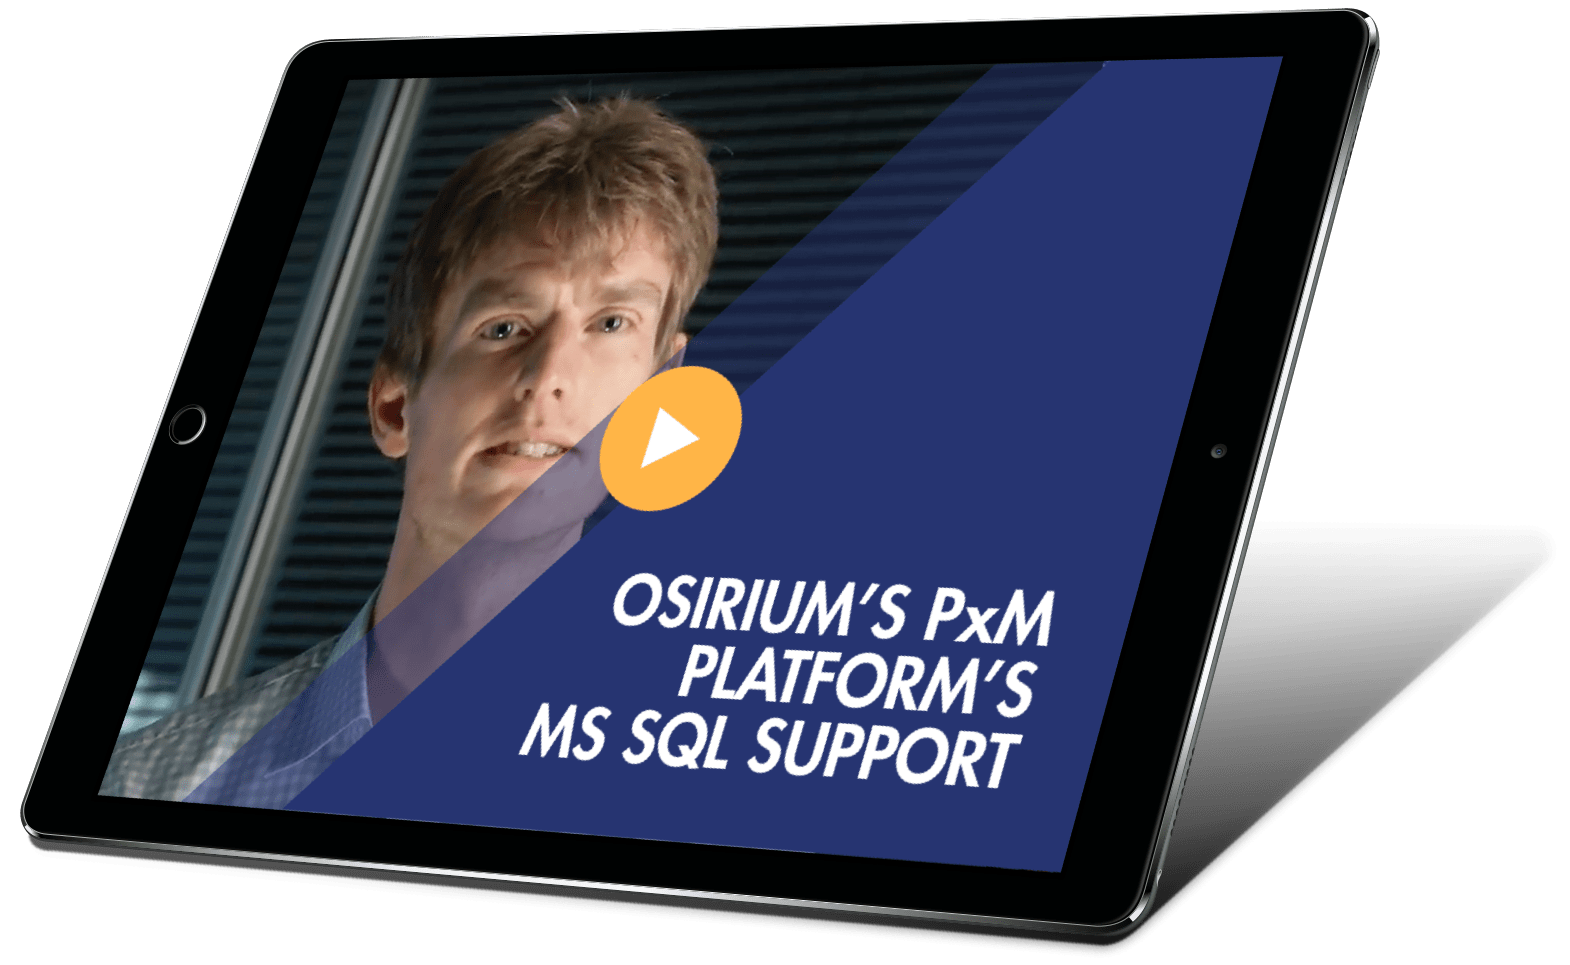 Osirium's PxM Platform's MSSQL SSO Support